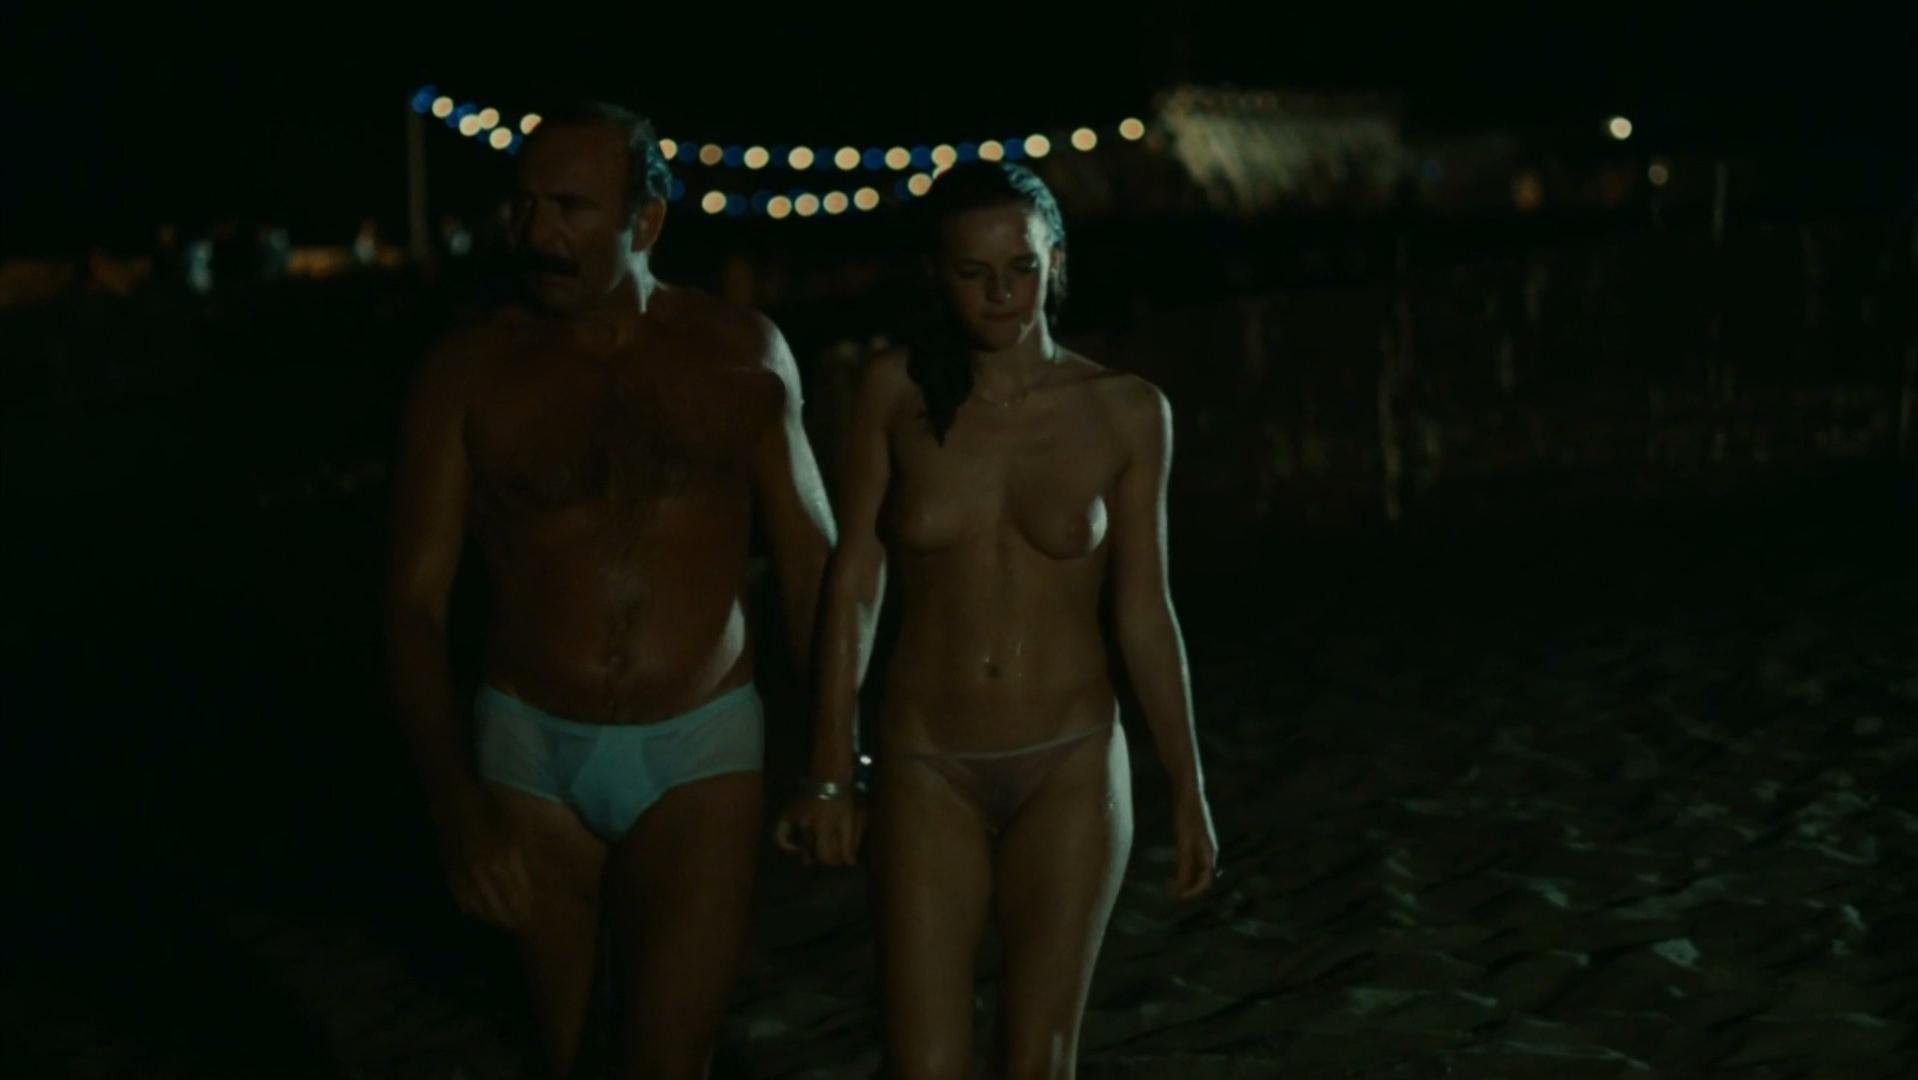 Nude Video Celebs Agnes Soral Nude Un Moment D égarement 1977